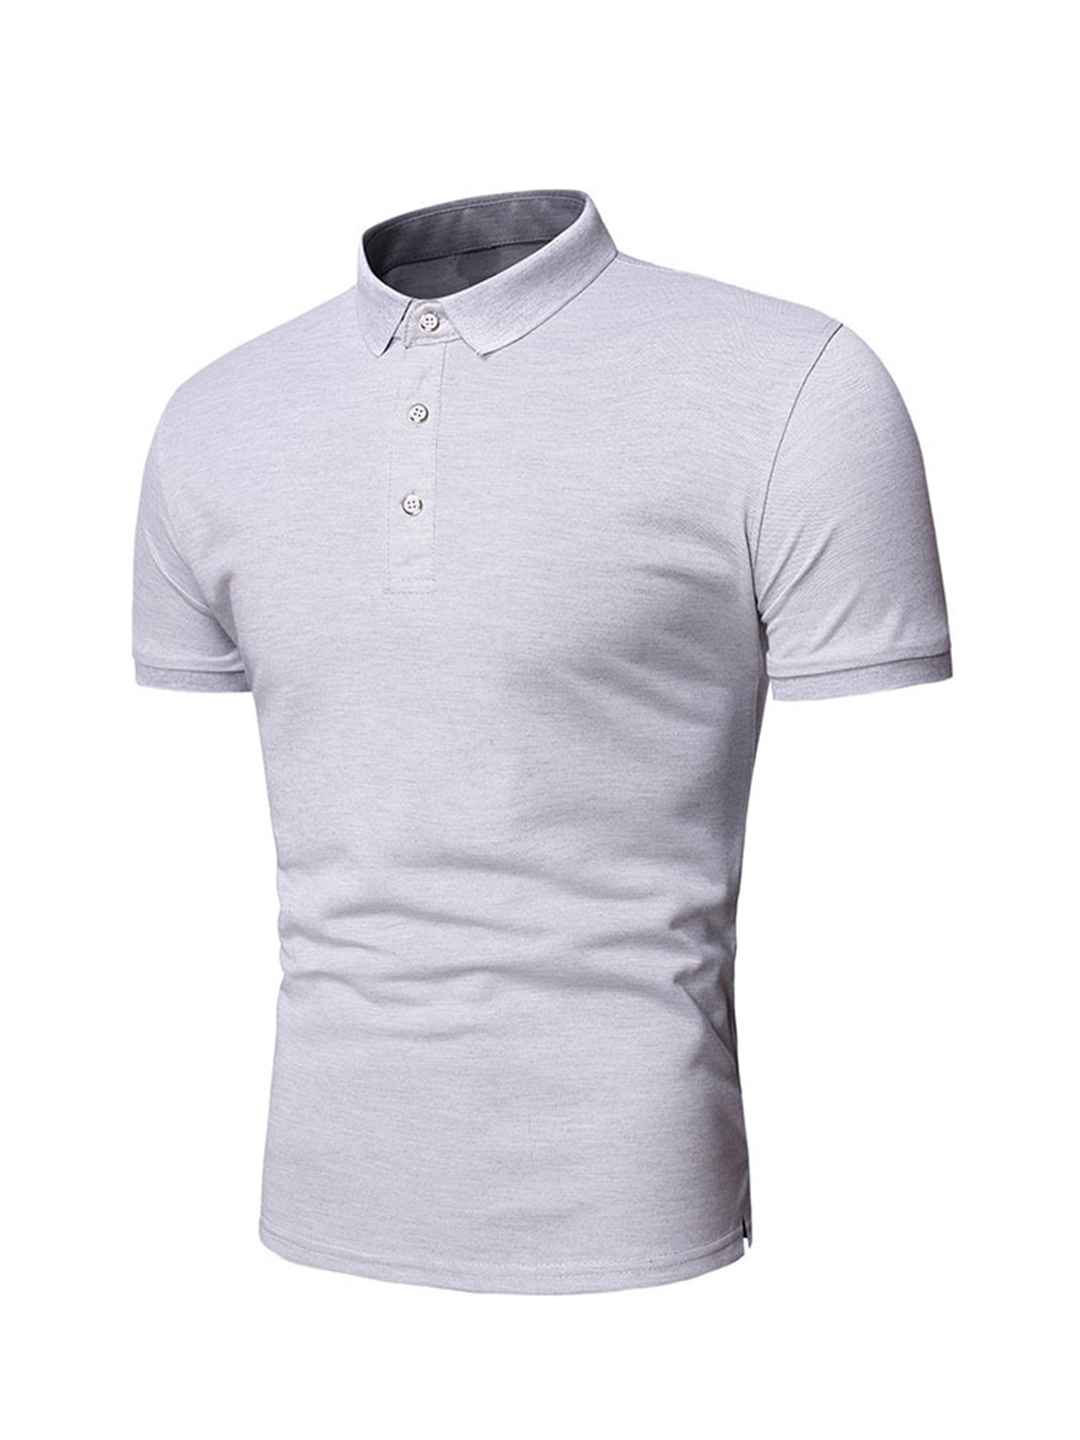 Men's Simple Solid Color Polo T-shirt